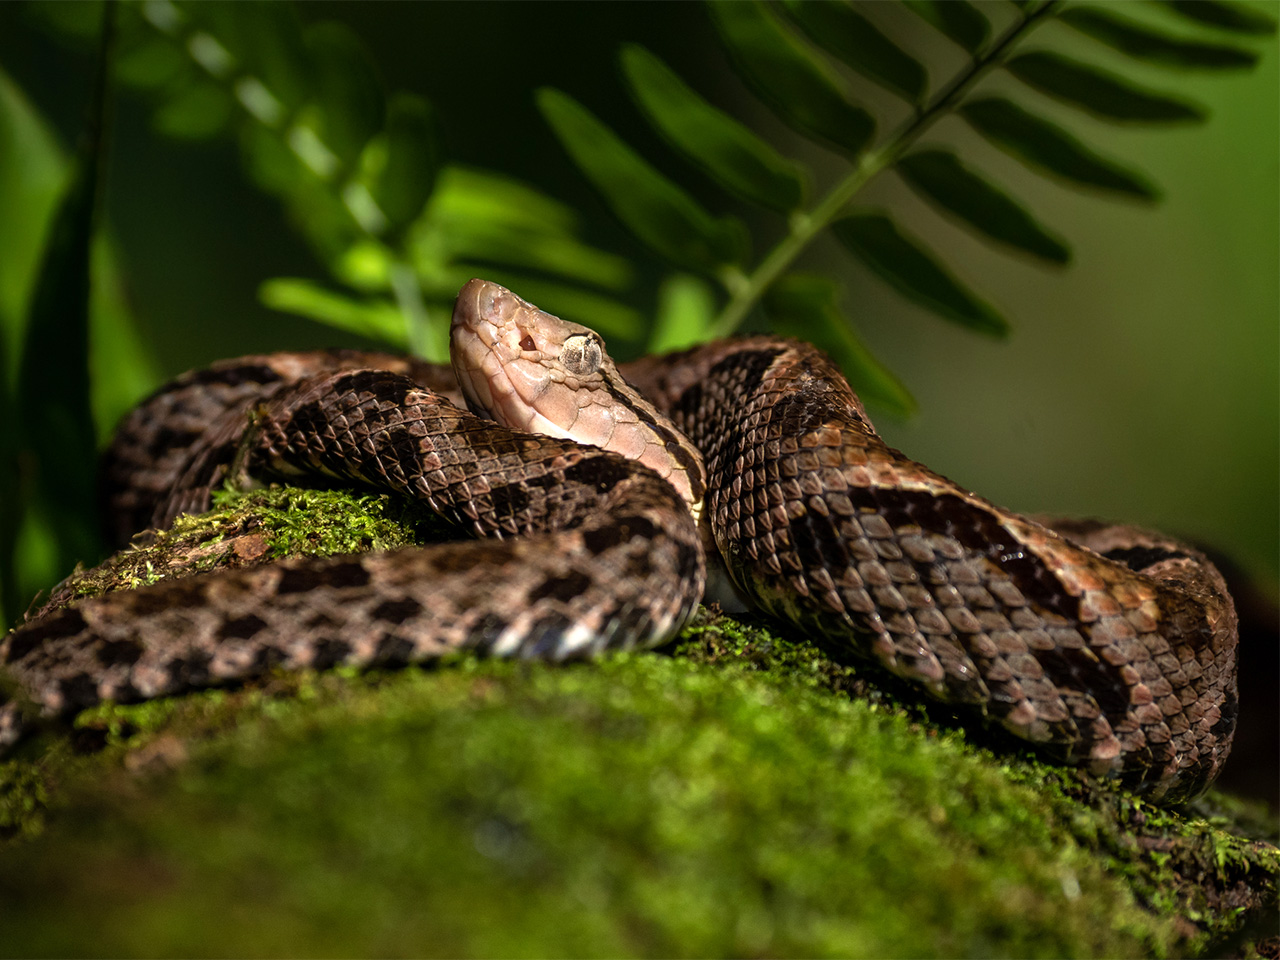 Close up of coiled snake, a fer-de-lance viper.